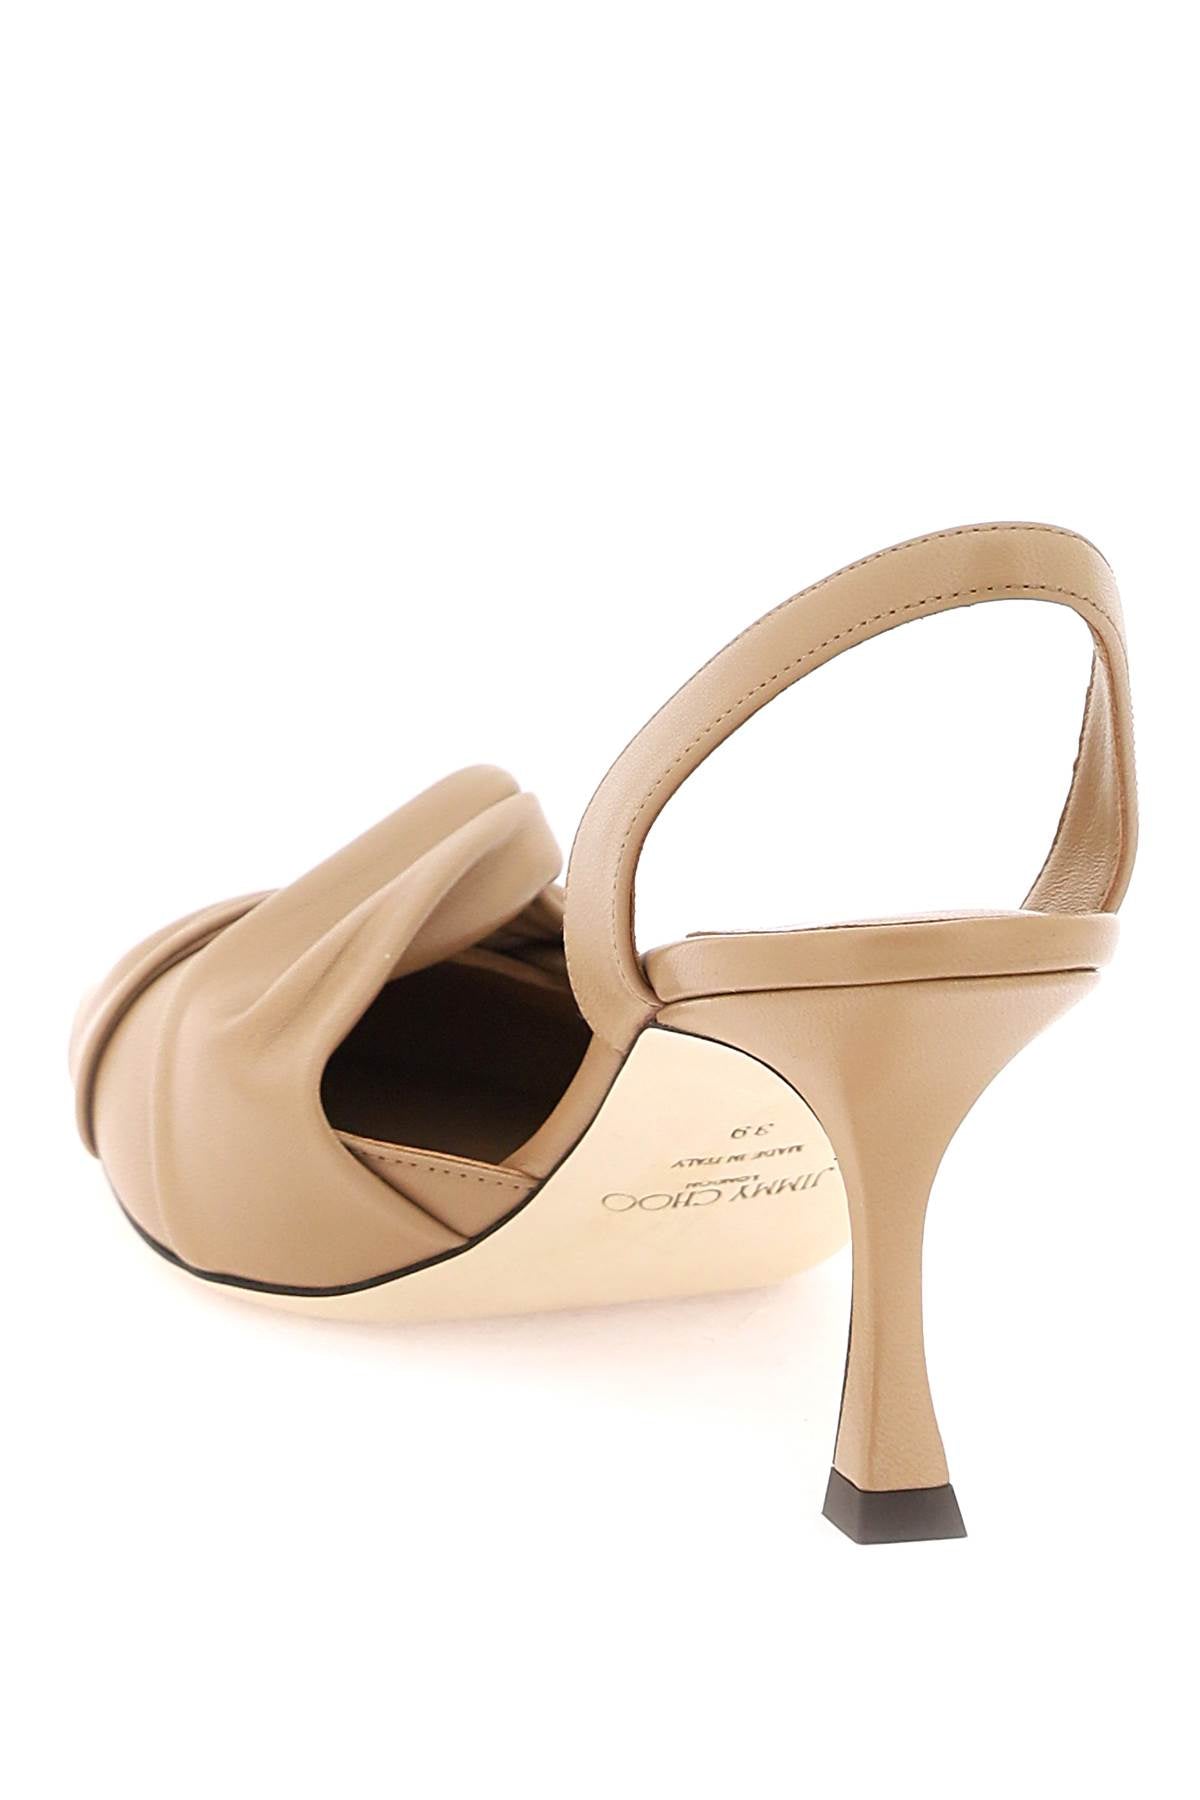 JIMMY CHOO Hedera Slingback Pumps - Neutral Heeled Shoes for Women